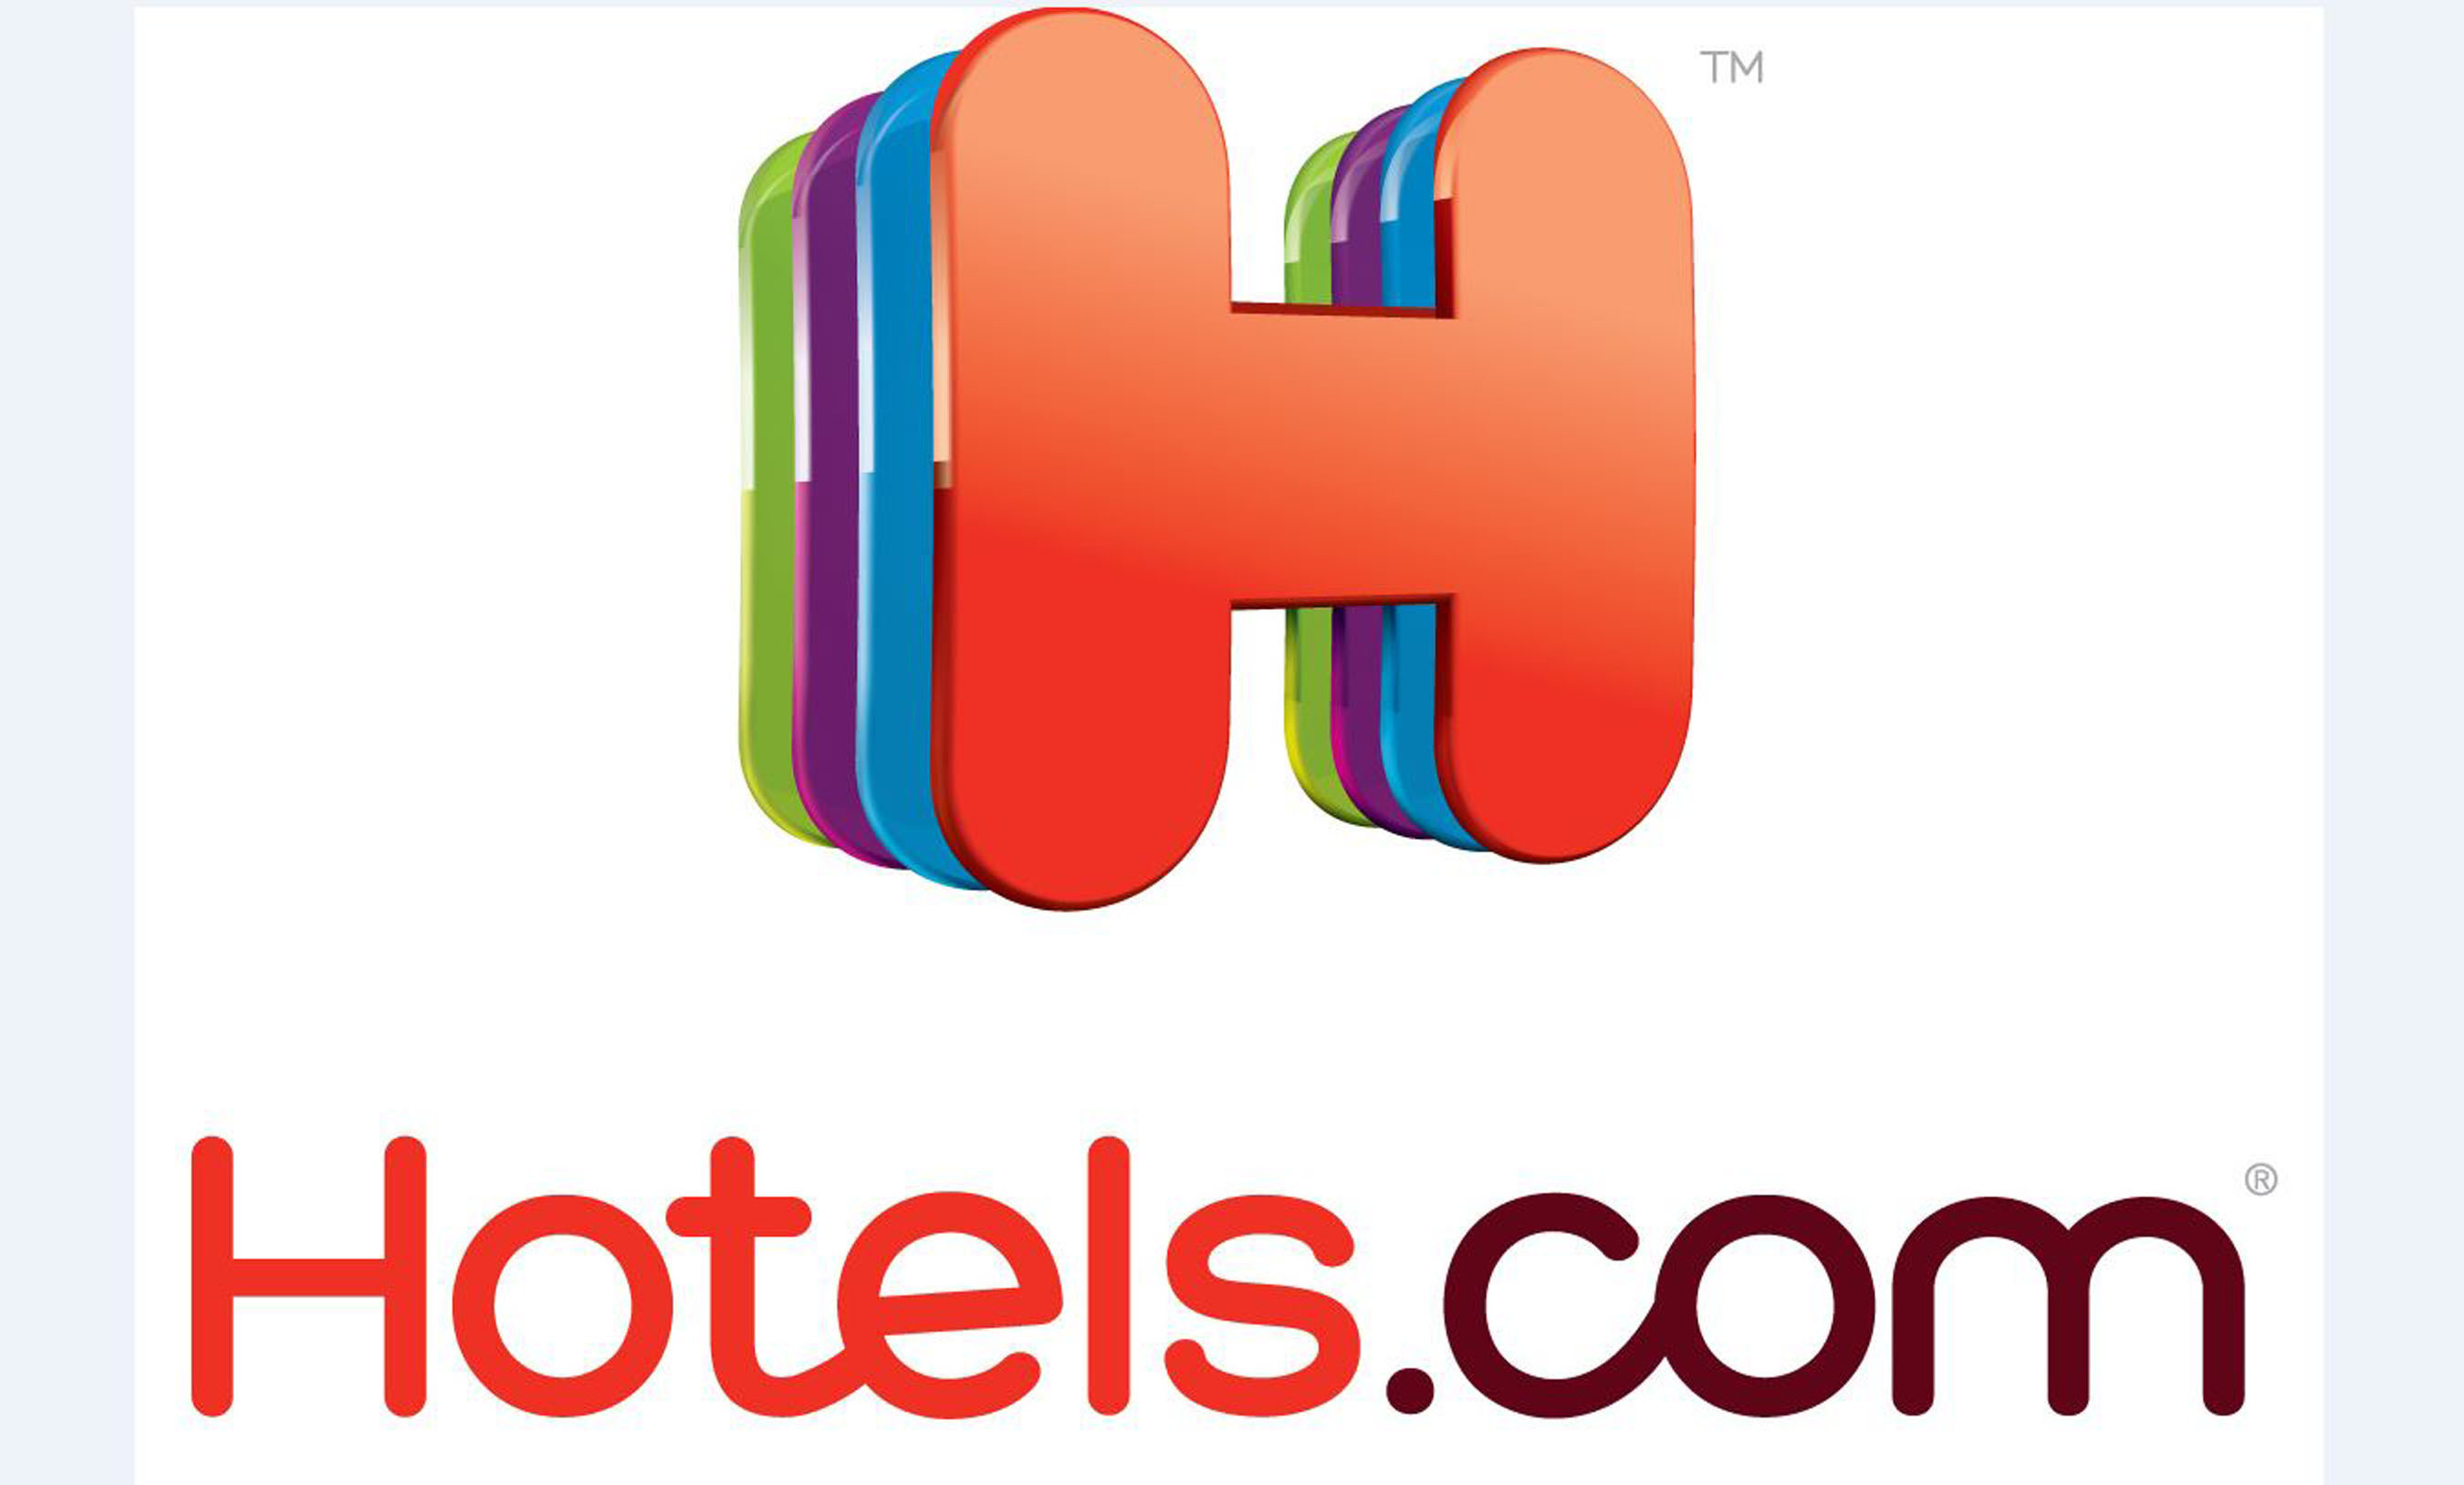 Hotels.com.